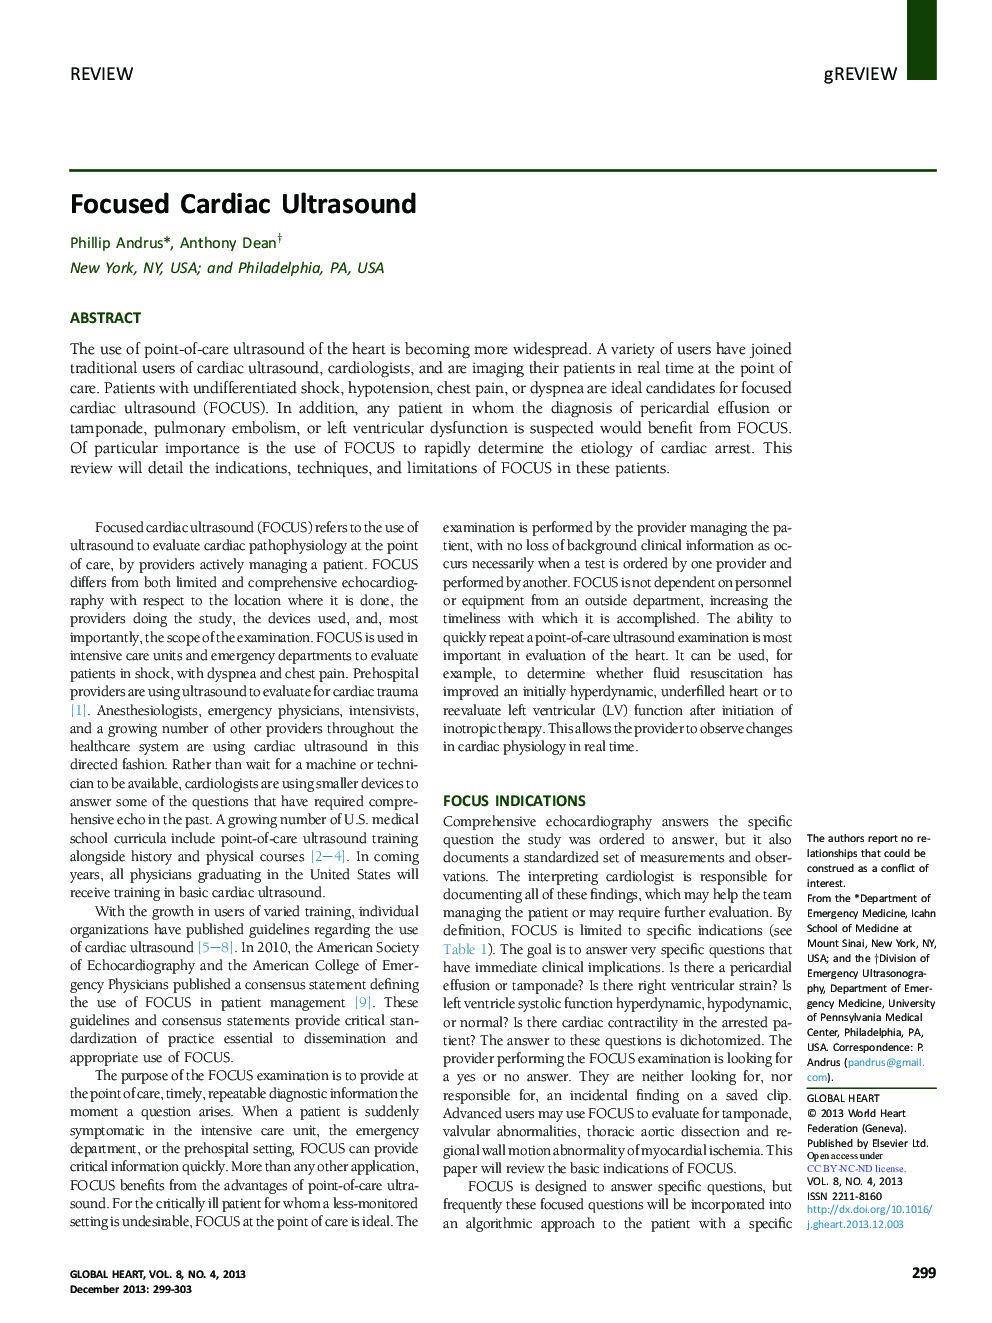 Focused Cardiac Ultrasound